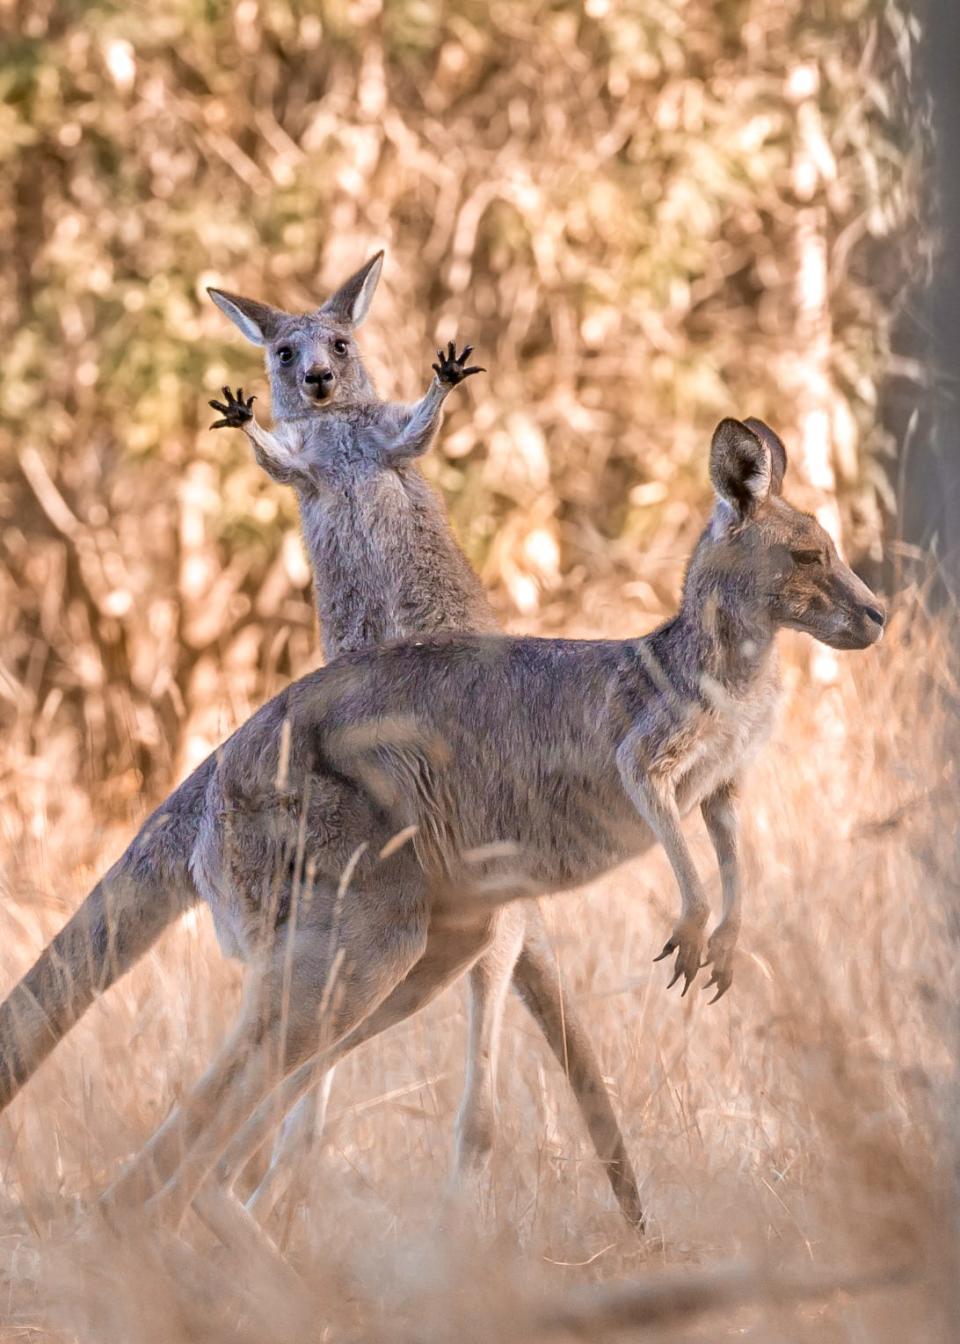 A joey jumps up behind another kangaroo.